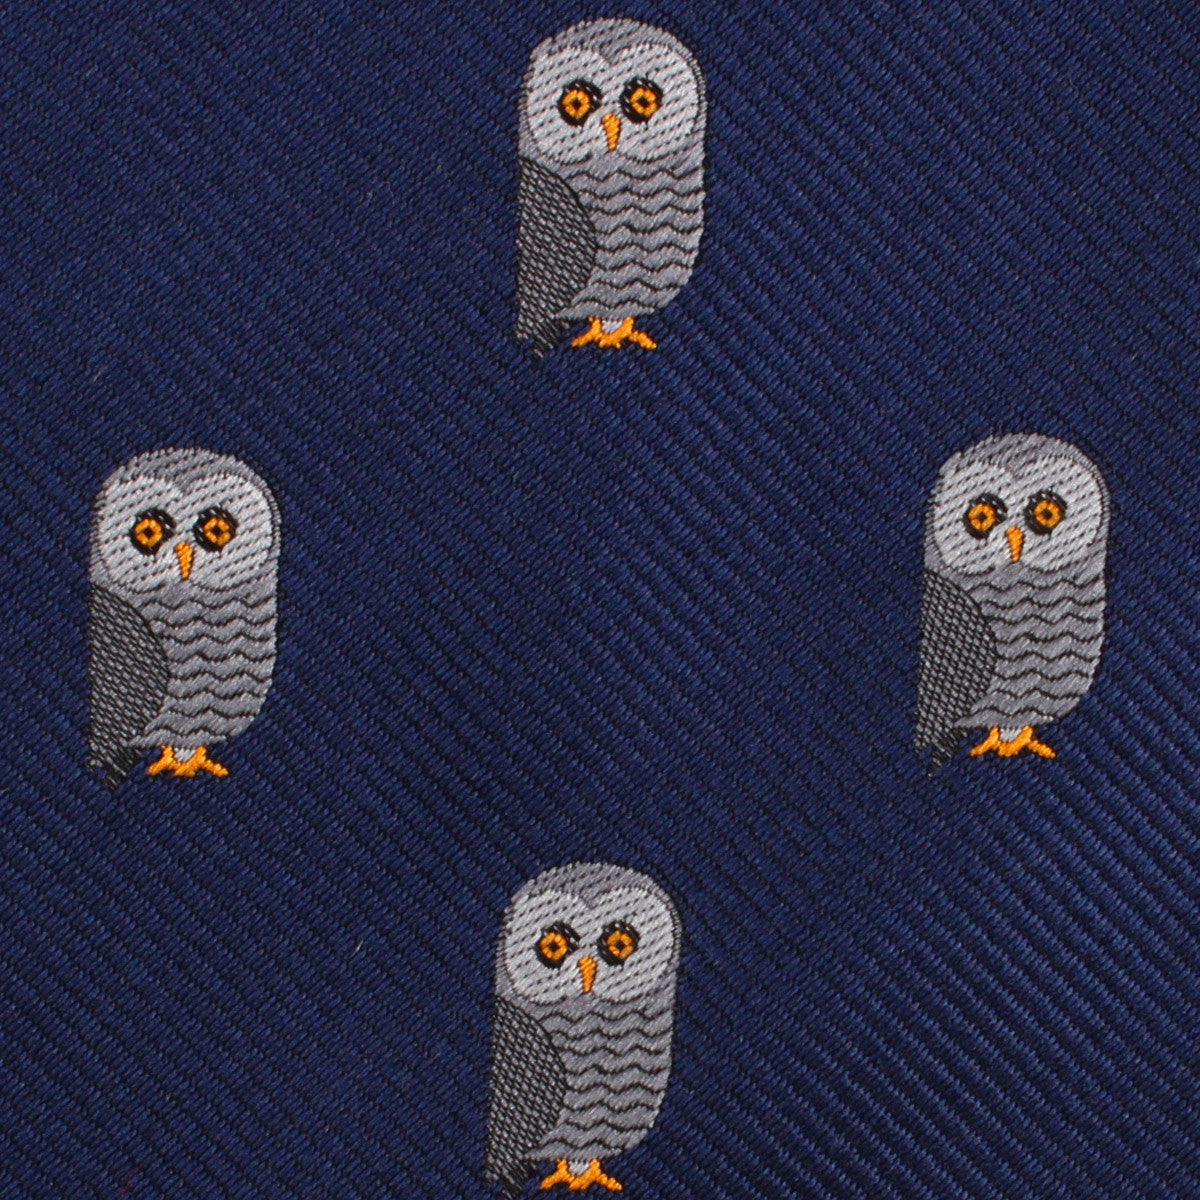 Southern Grey Owl Fabric Self Bowtie